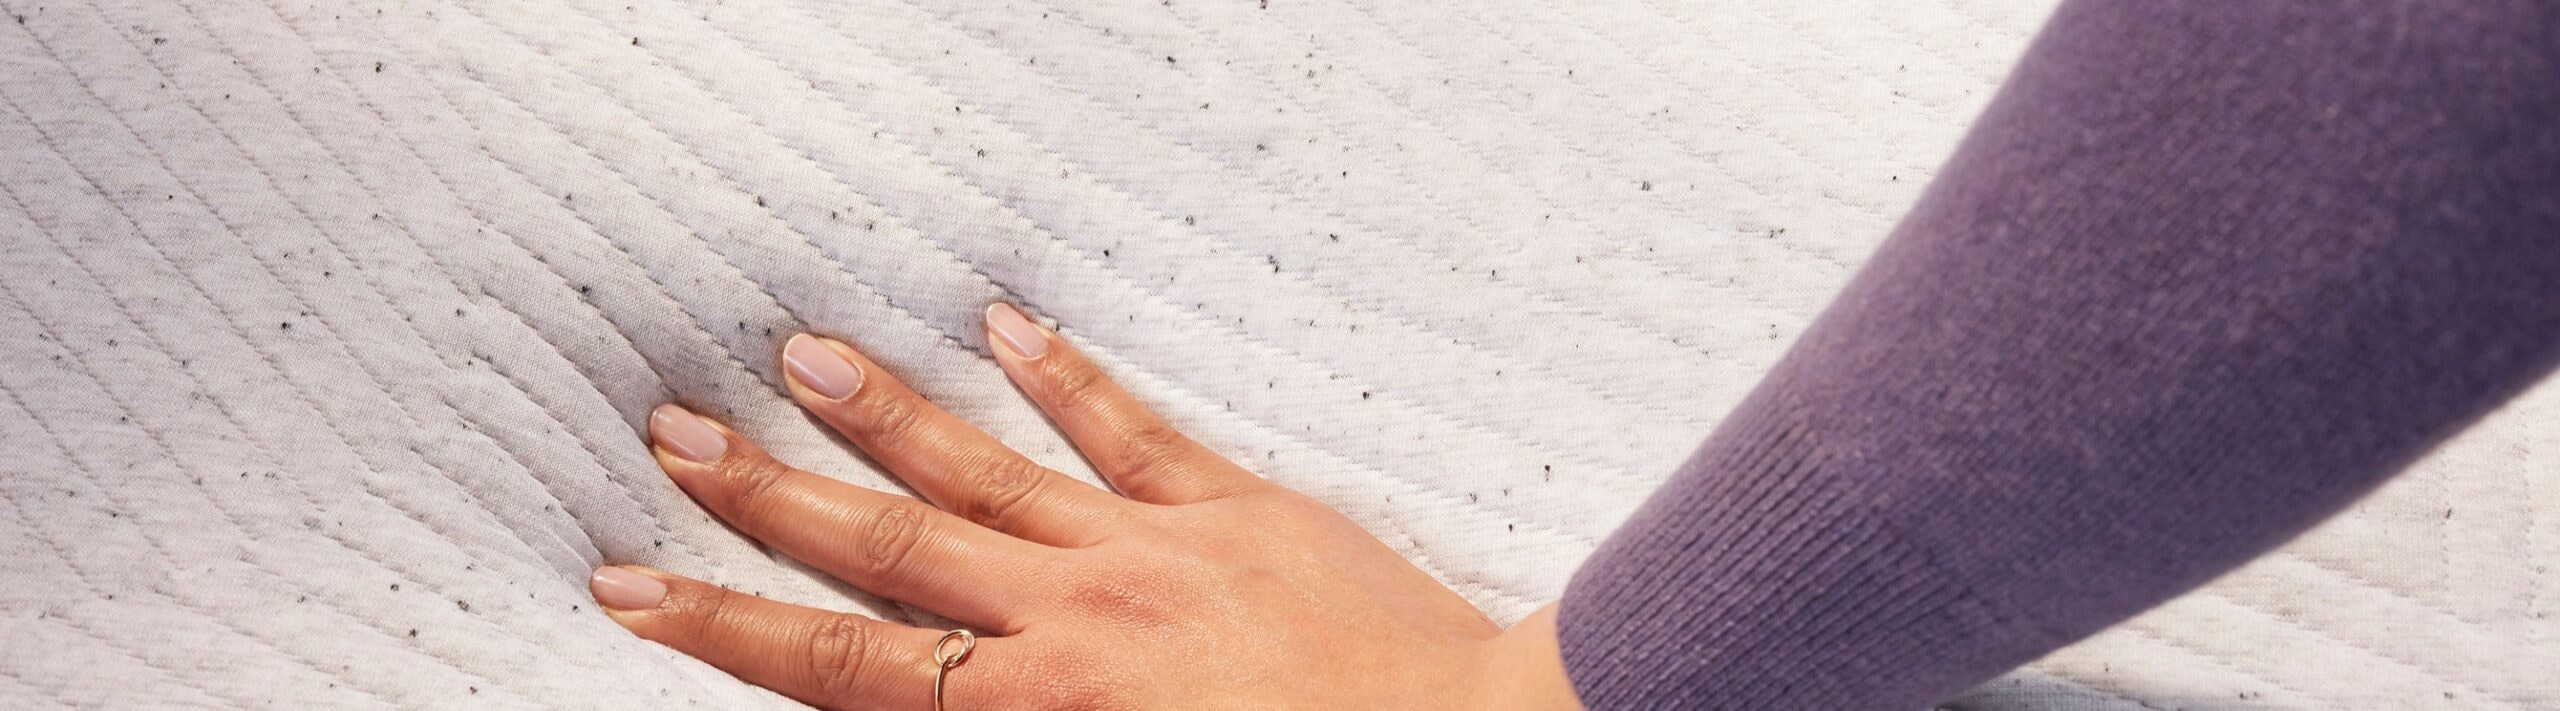 womans hand sinking into soft mattress